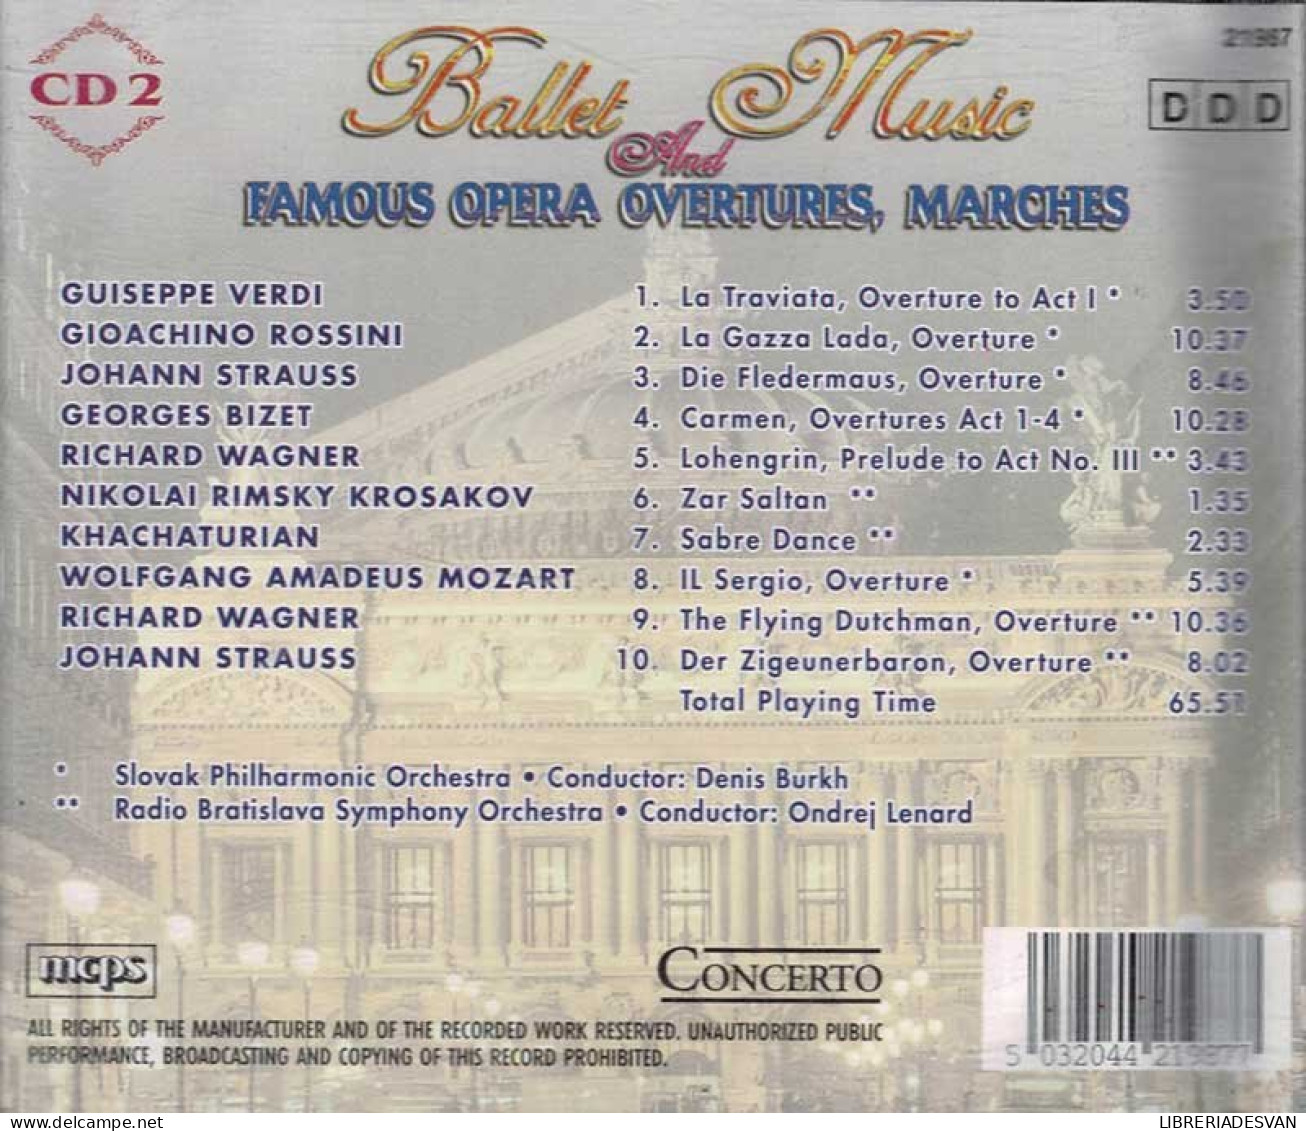 Ballet Music. Famous Opera, Overtures, Marches. CD 2 - Klassik